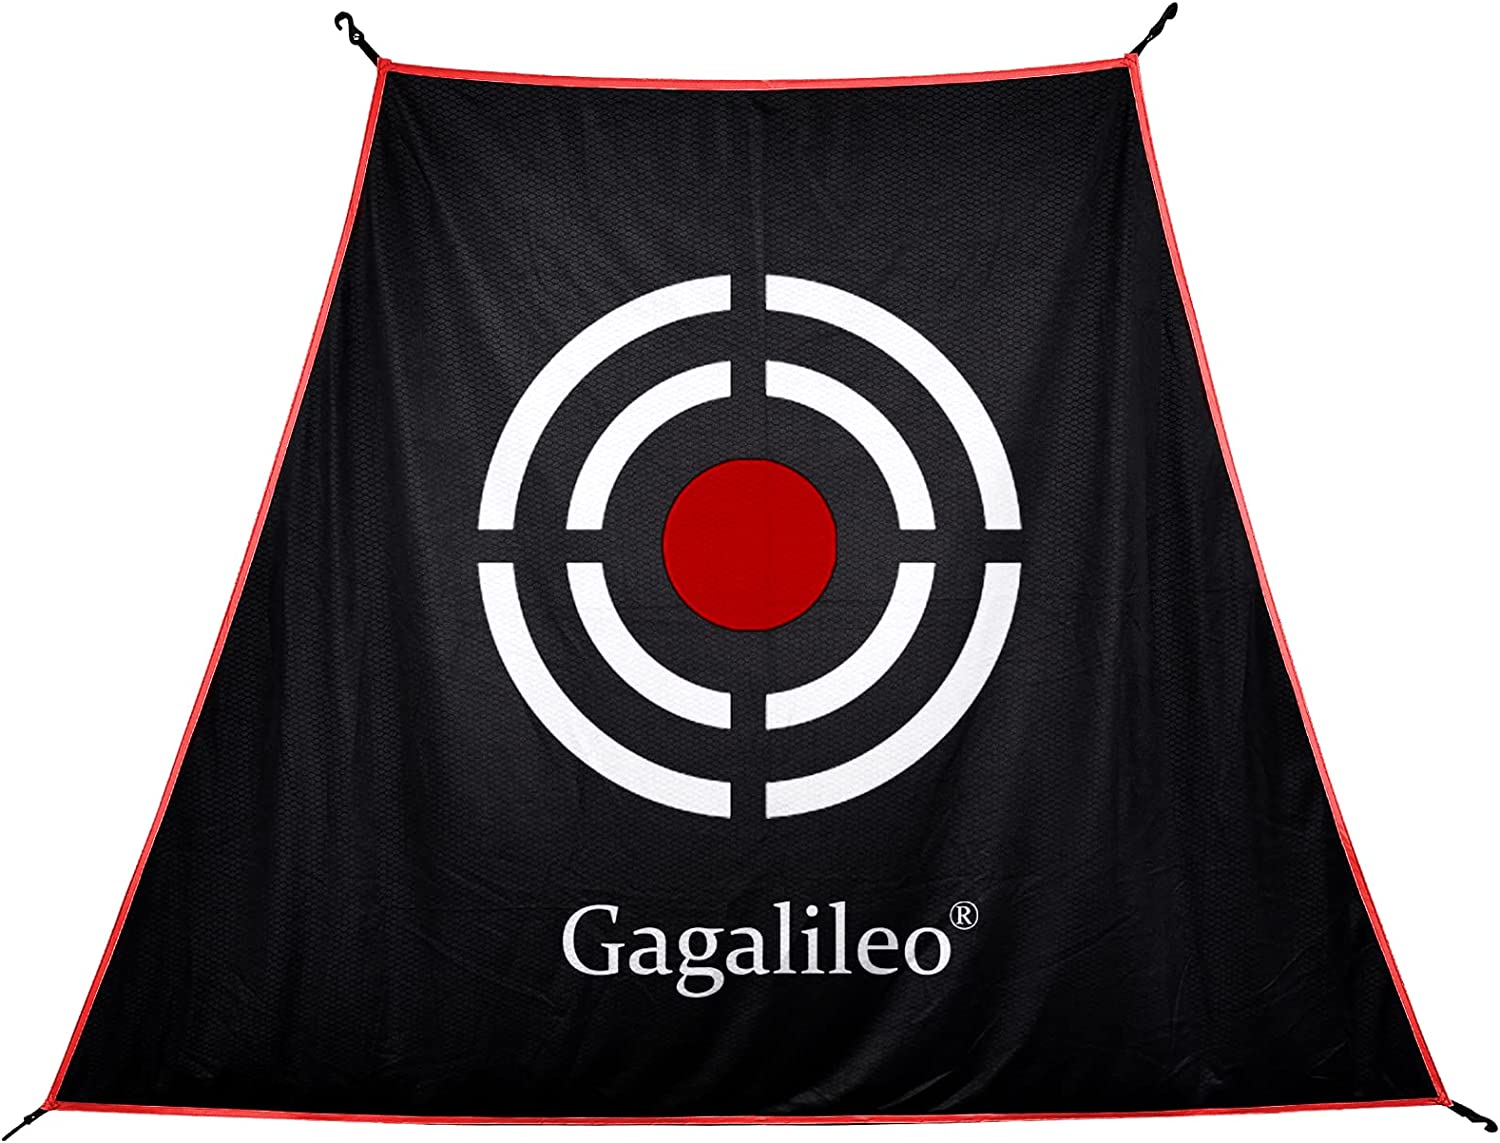 Cible de golf Galileo de remplacement pour filet de golf Galileo 7X5X3